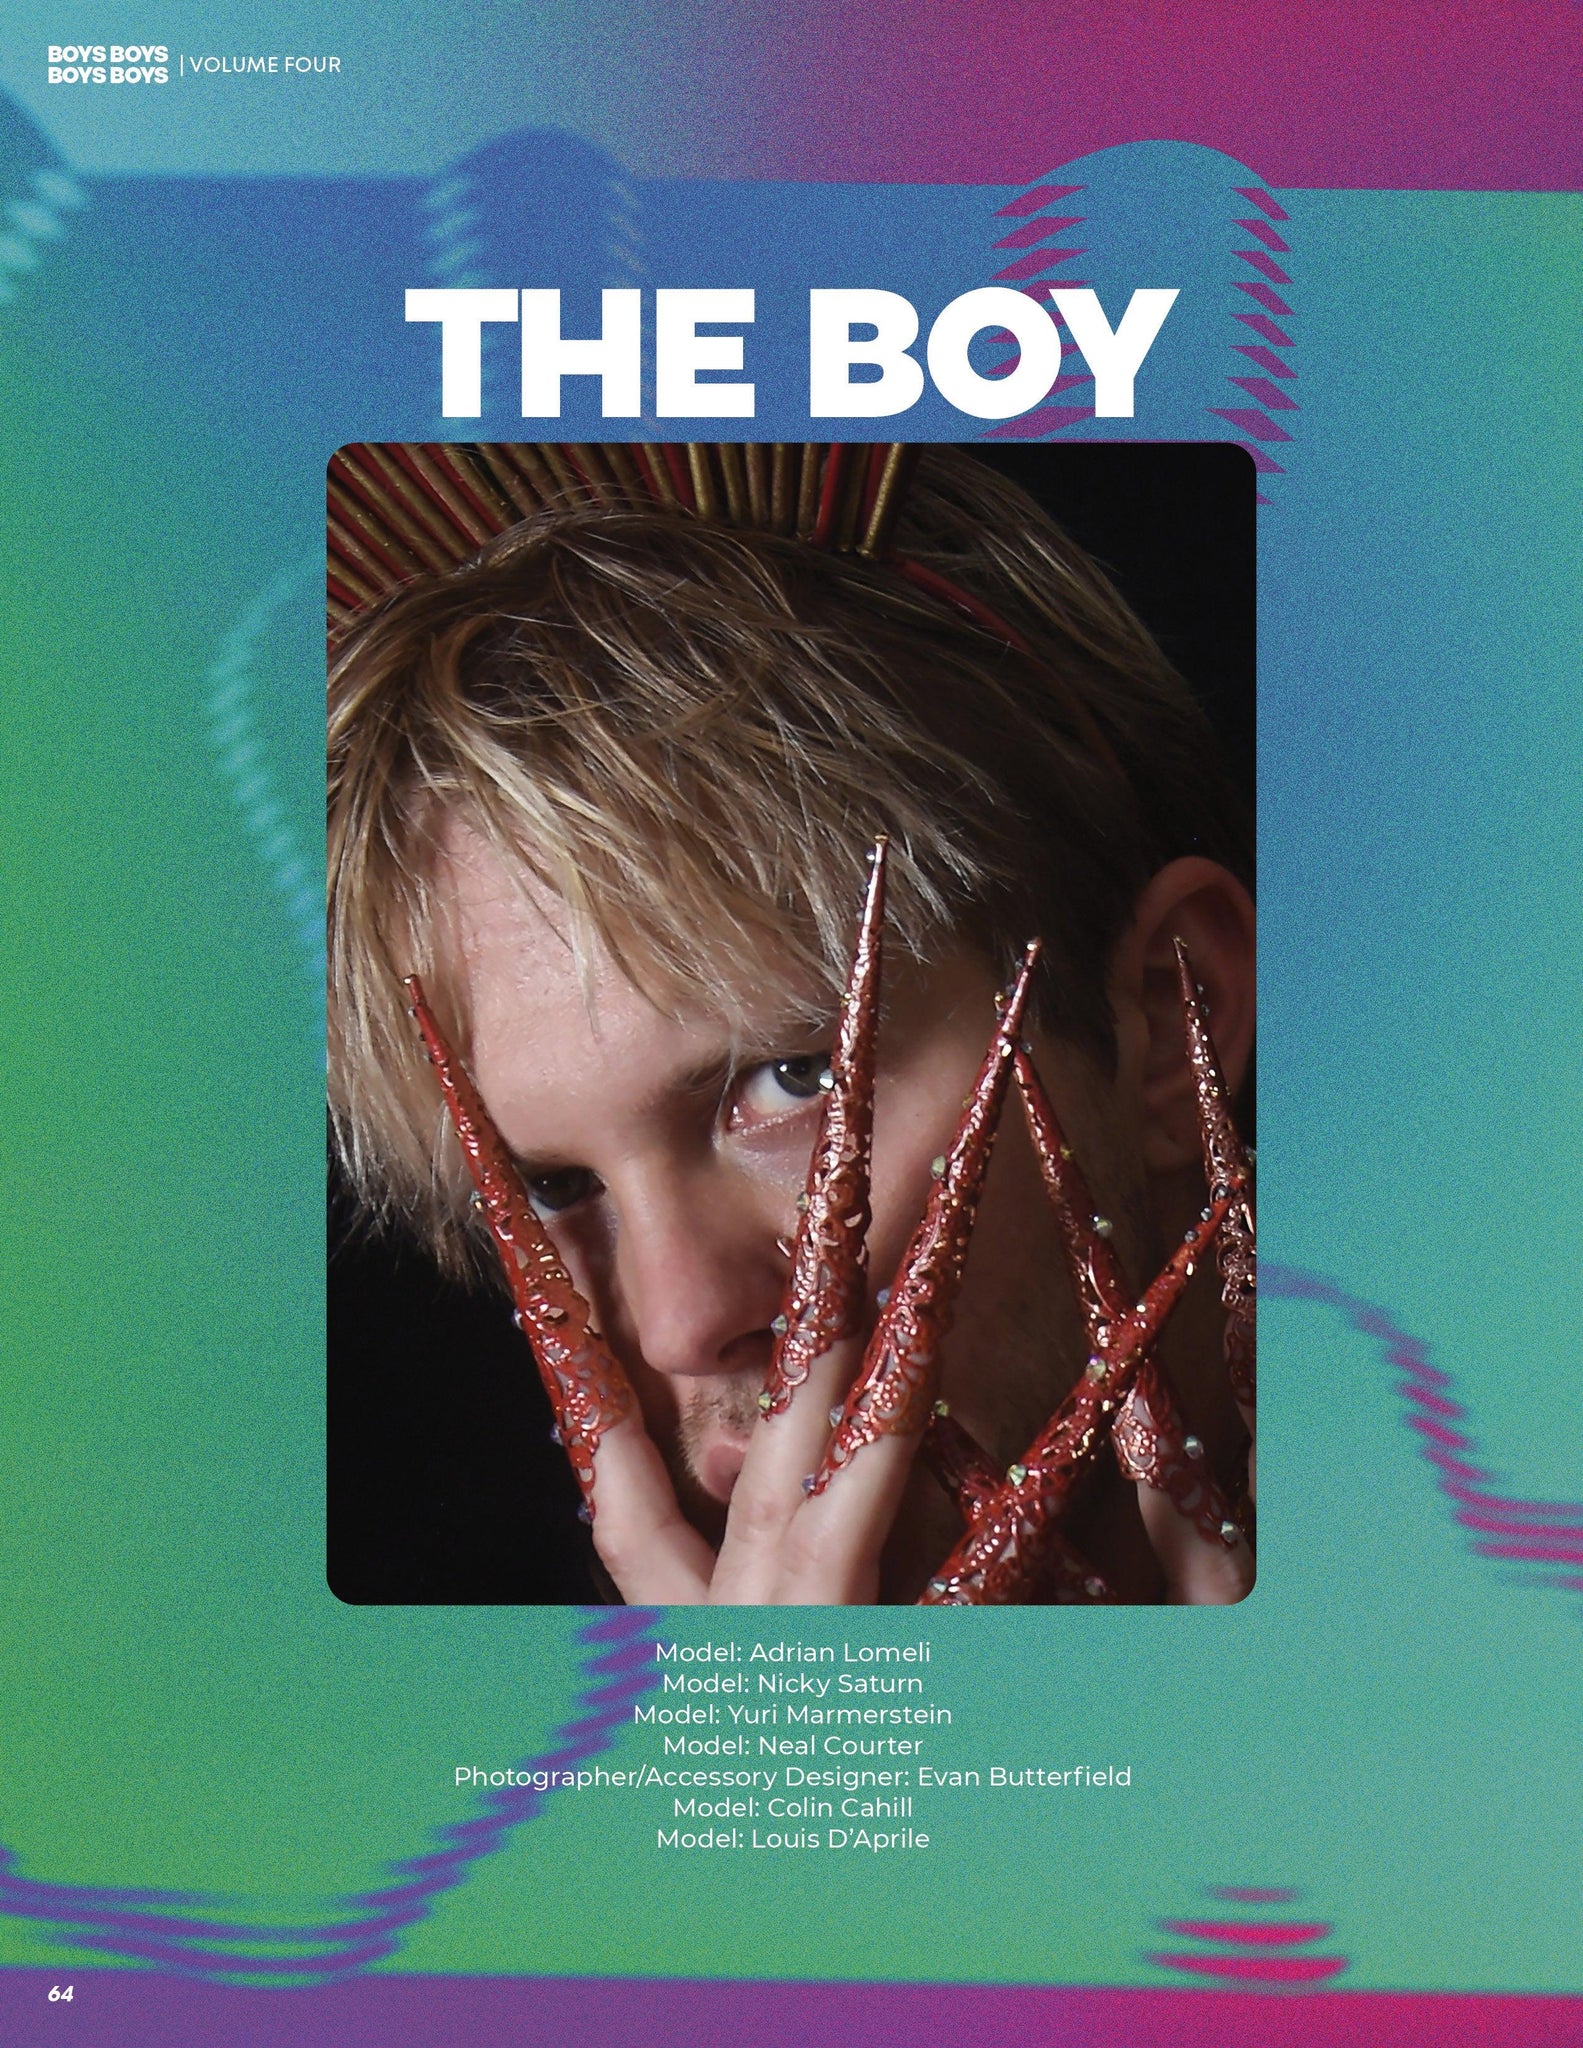 BOYS BOYS BOYS BOYS | VOLUME FOUR | ISSUE #24 - Mob Journal